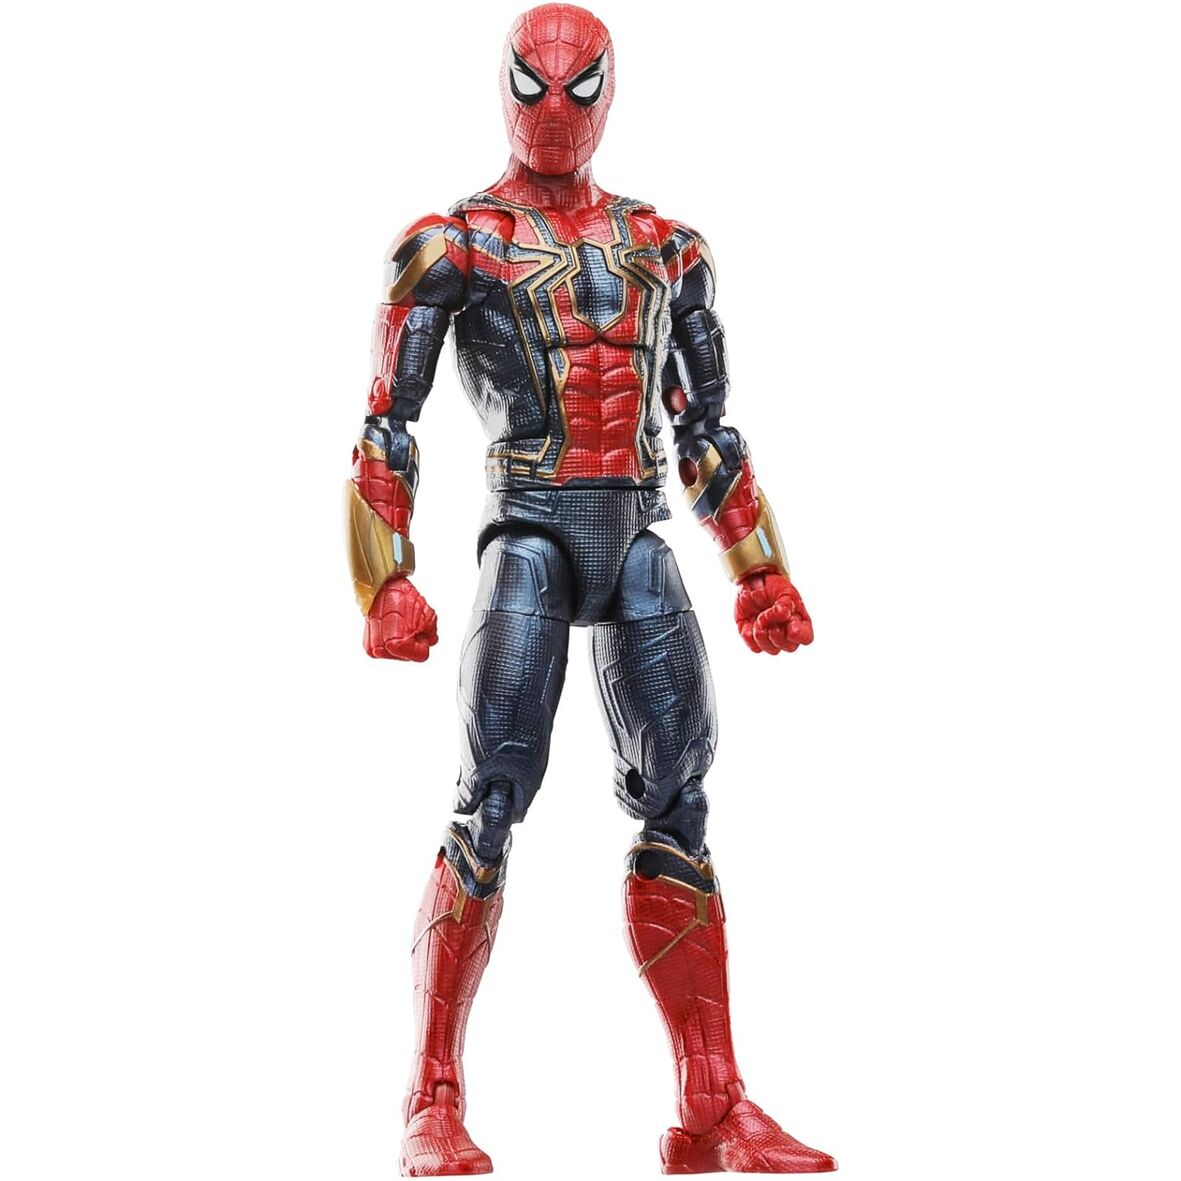 Figura Iron Spider Legends Series Marvel 15cm